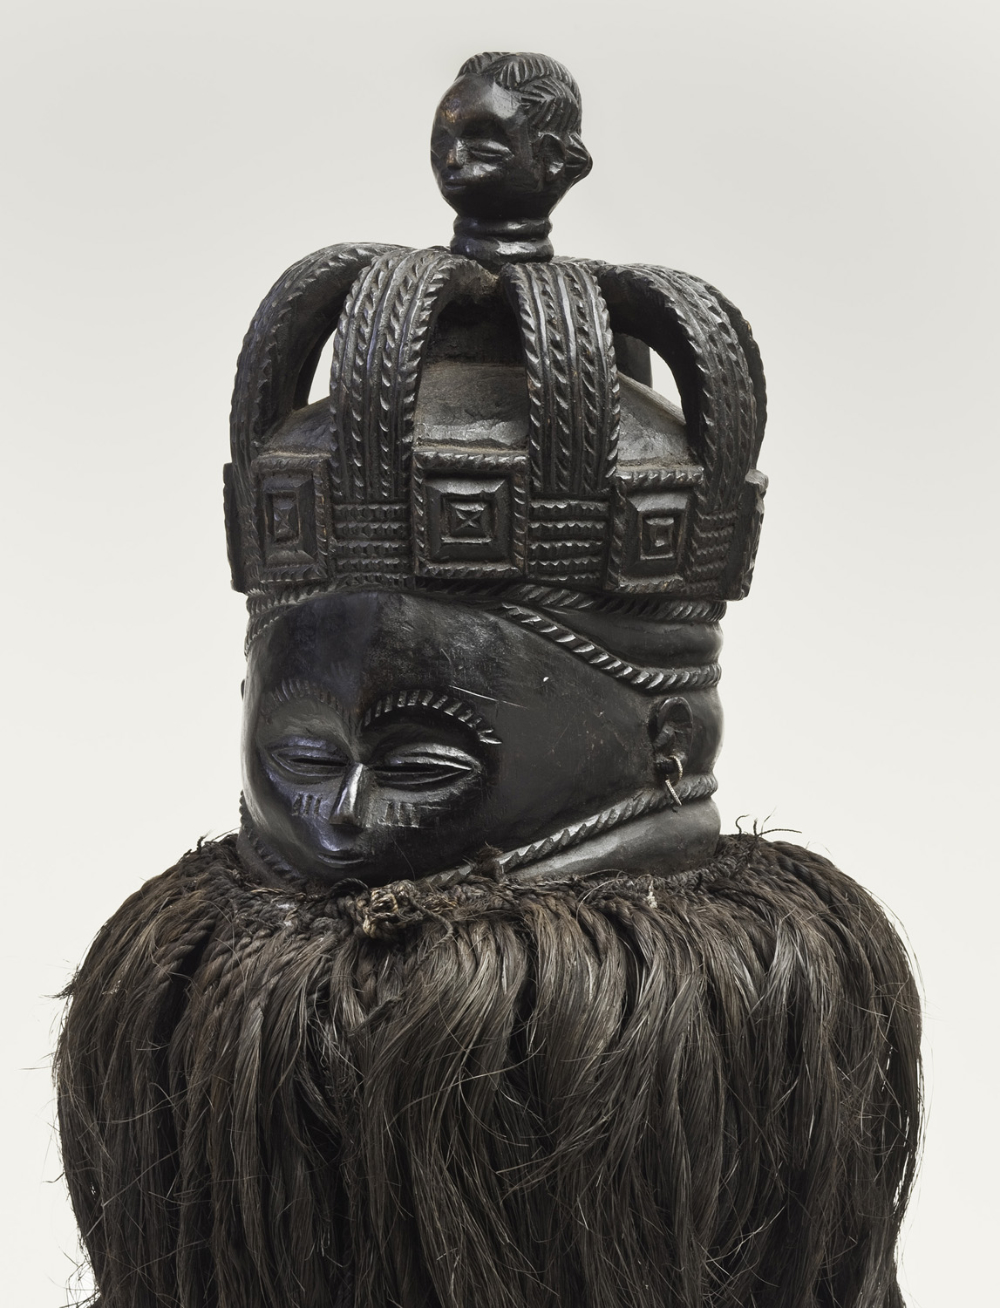 thumbnail of Helmet mask (sowei) from Mende, Sierra Leone. medium: wood, black. dimensions: 14.5 x 9.5 inches